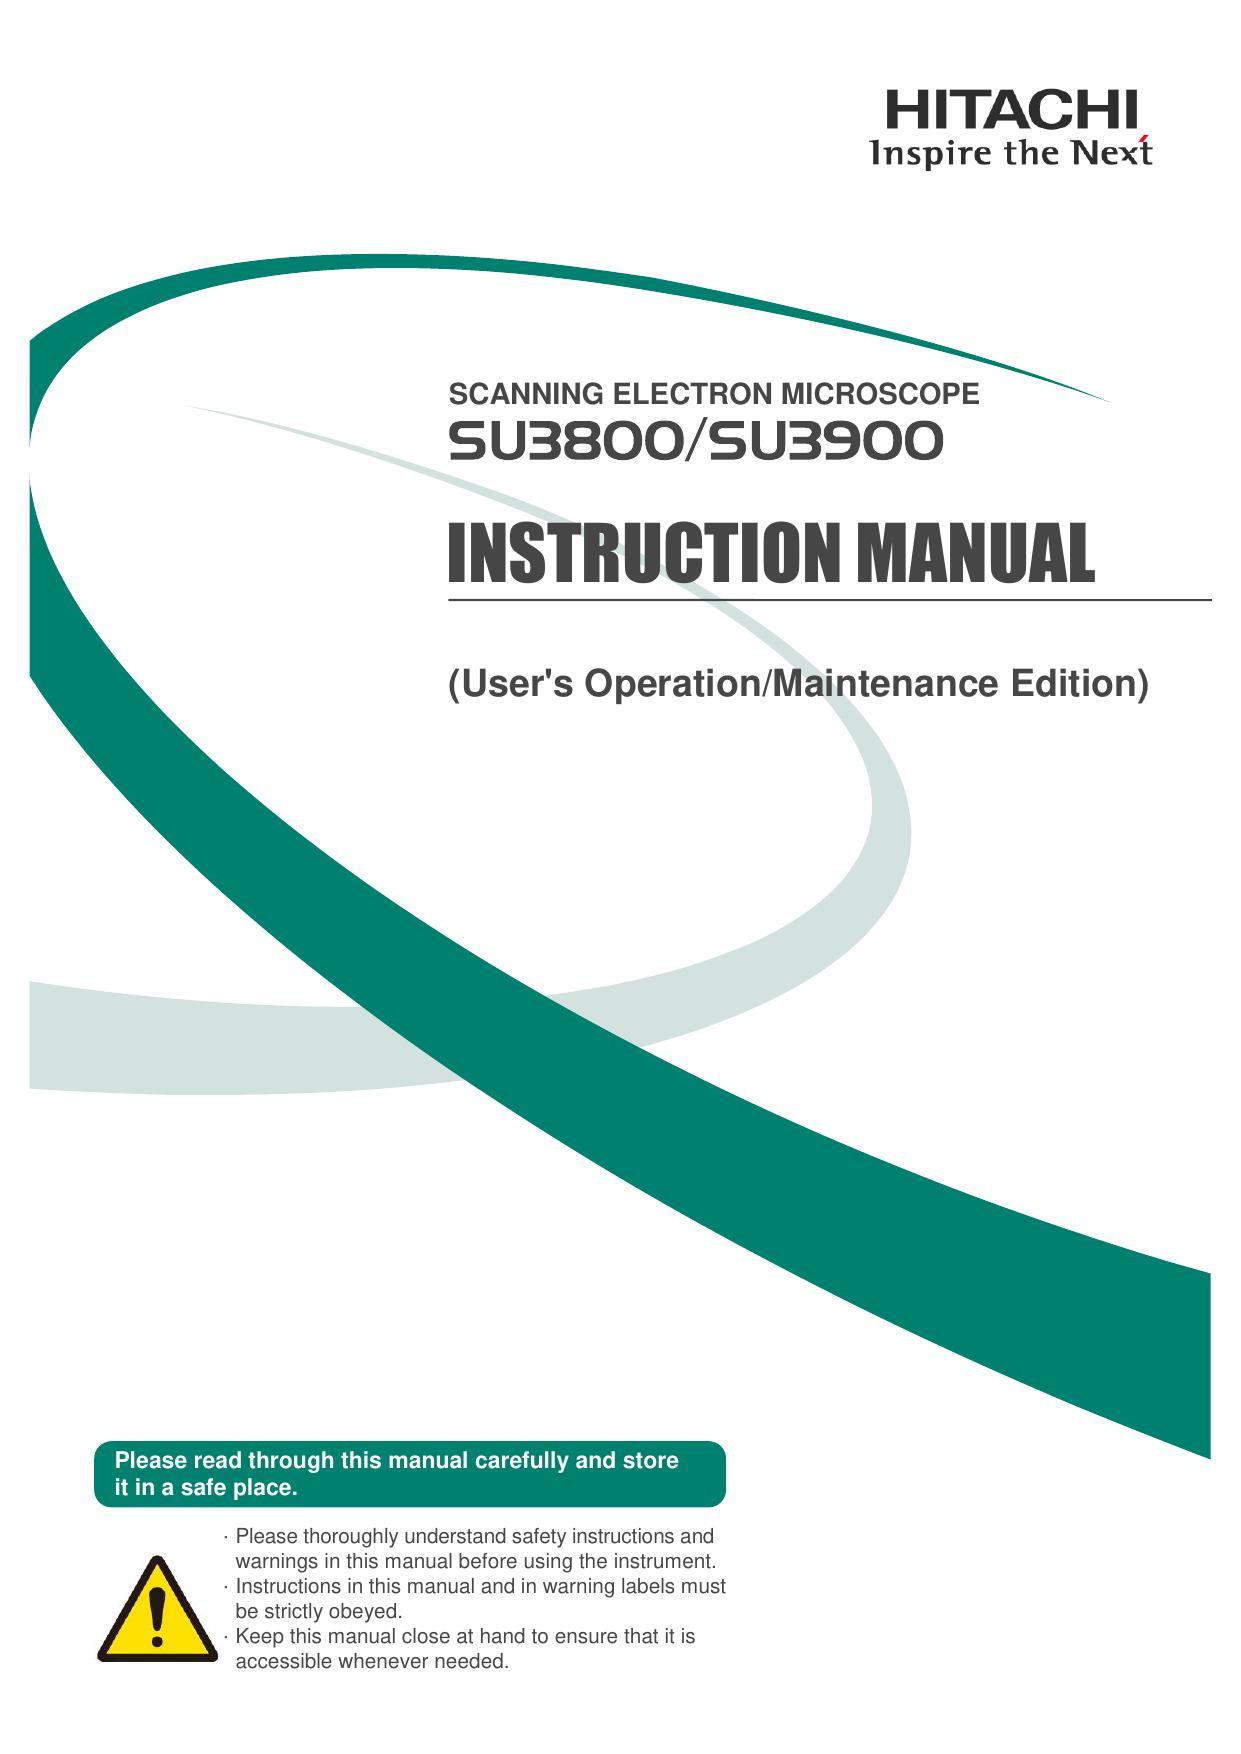 hitachi-scanning-electron-microscope-su3800su3900-instruction-manual-users-operationmaintenance-edition.pdf